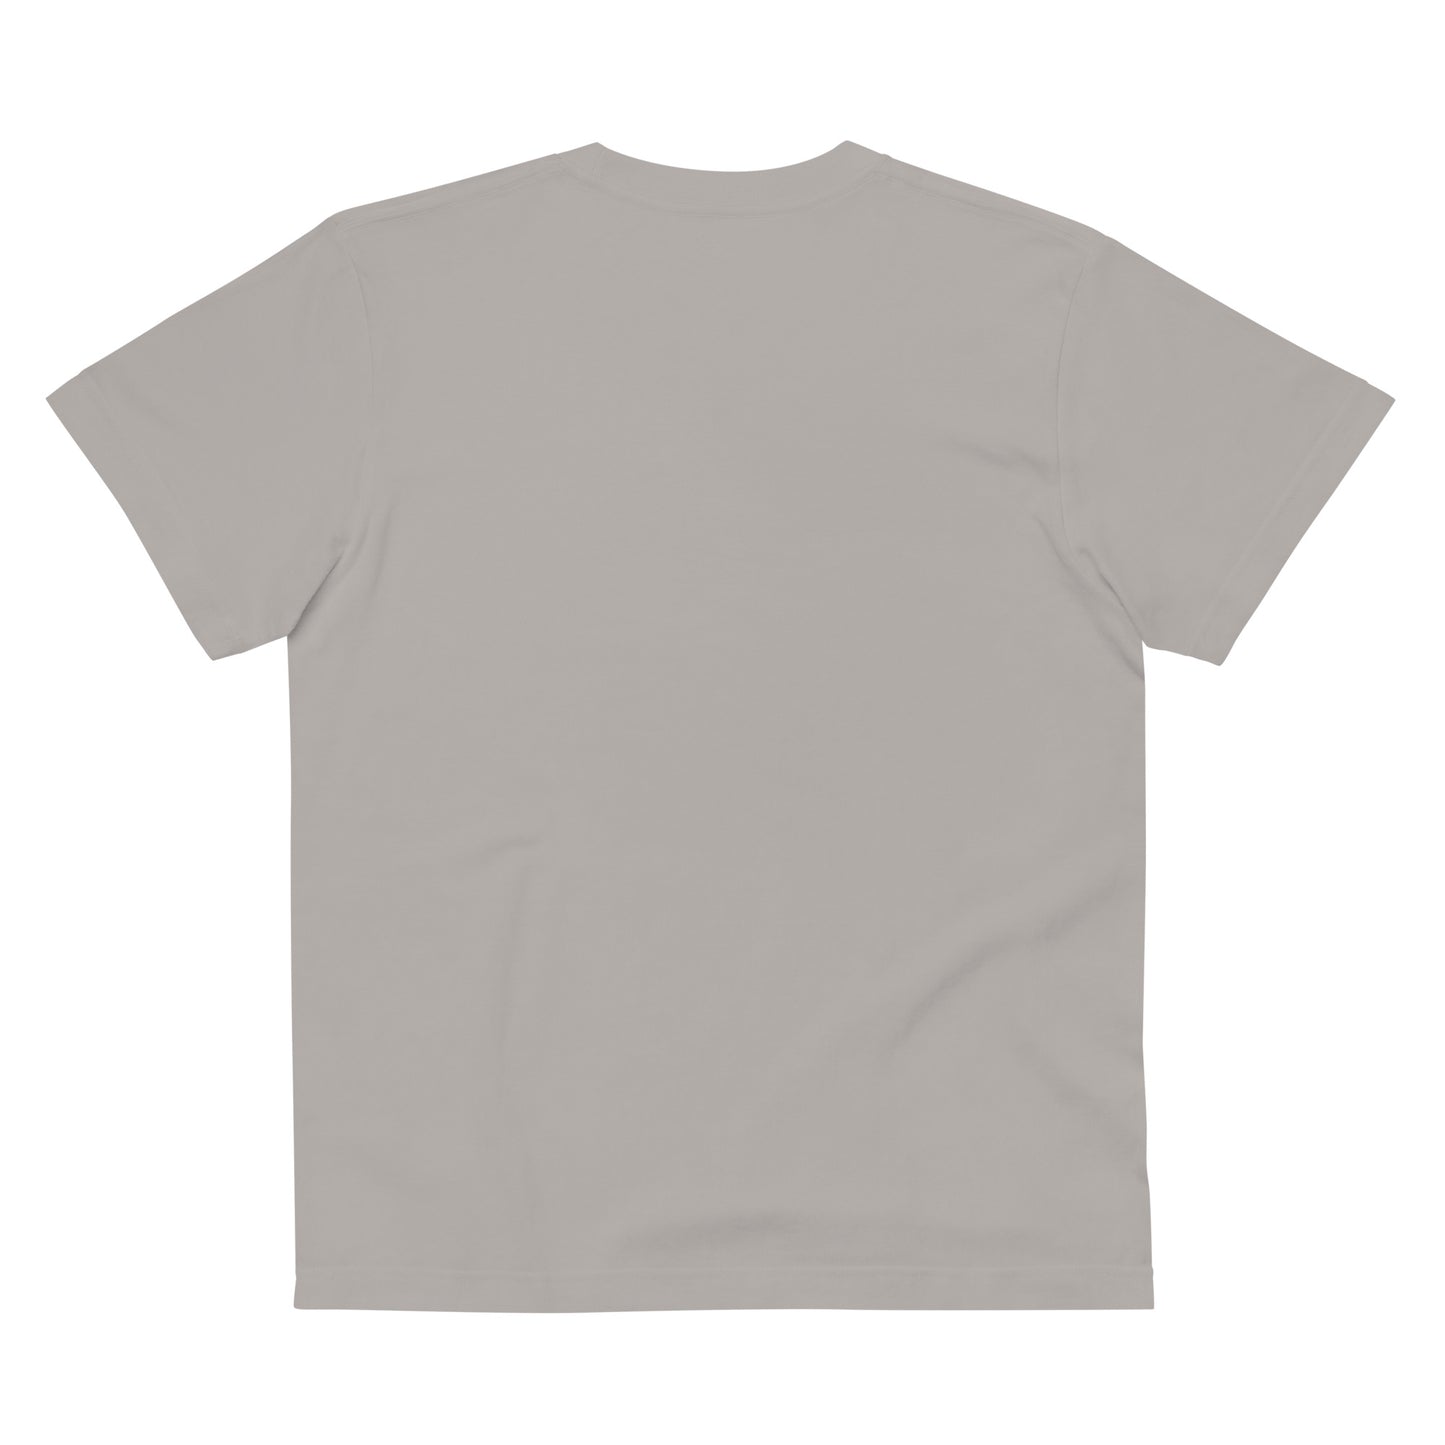 P016 - เสื้อยืดคอตตอนคุณภาพ (เตรียมตัว! : สีเทา/เงิน)